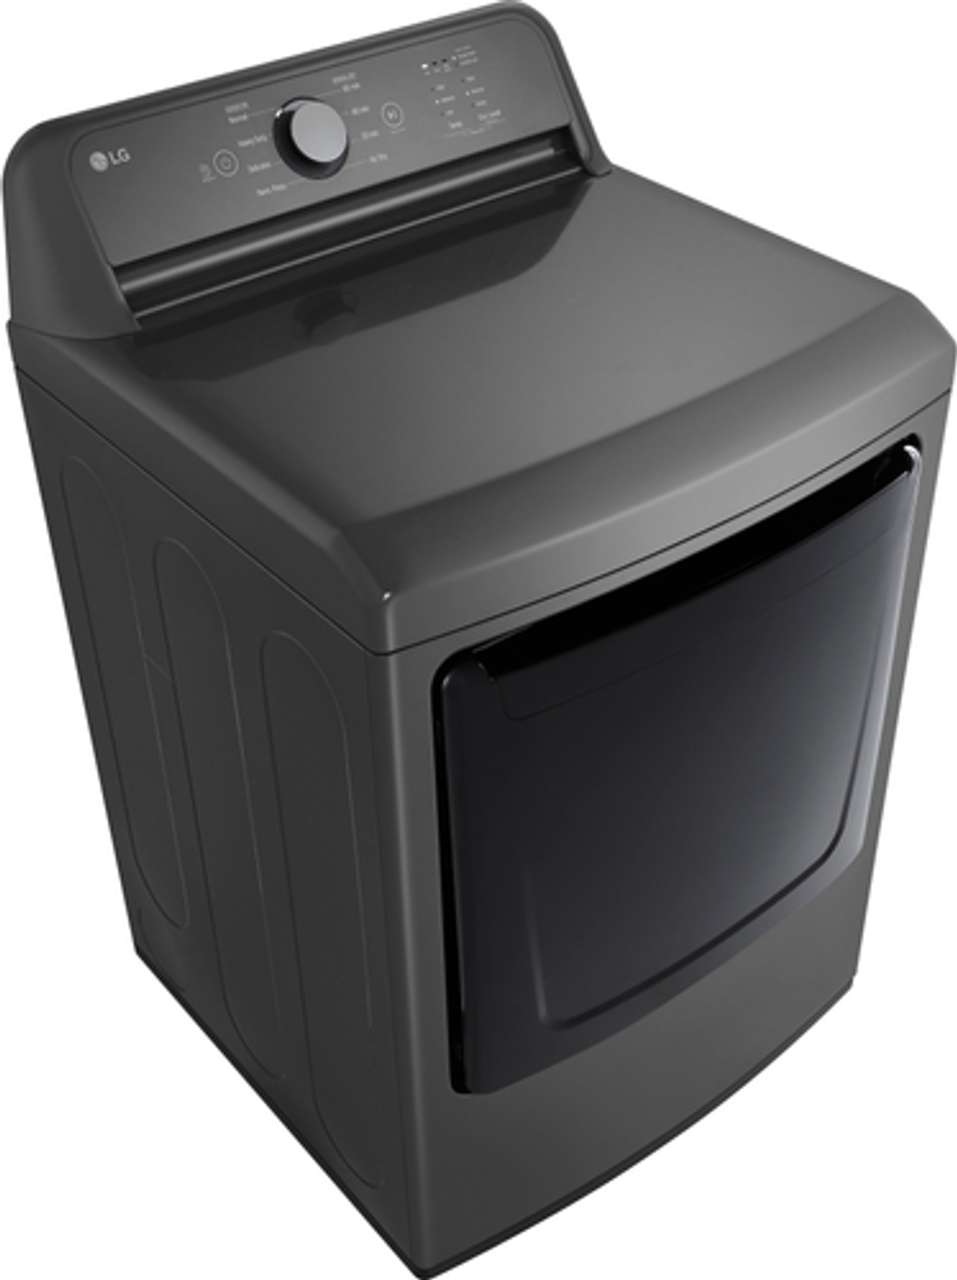 LG - 7.3 Cu. Ft. Electric Dryer with Sensor Dry - Monochrome Grey